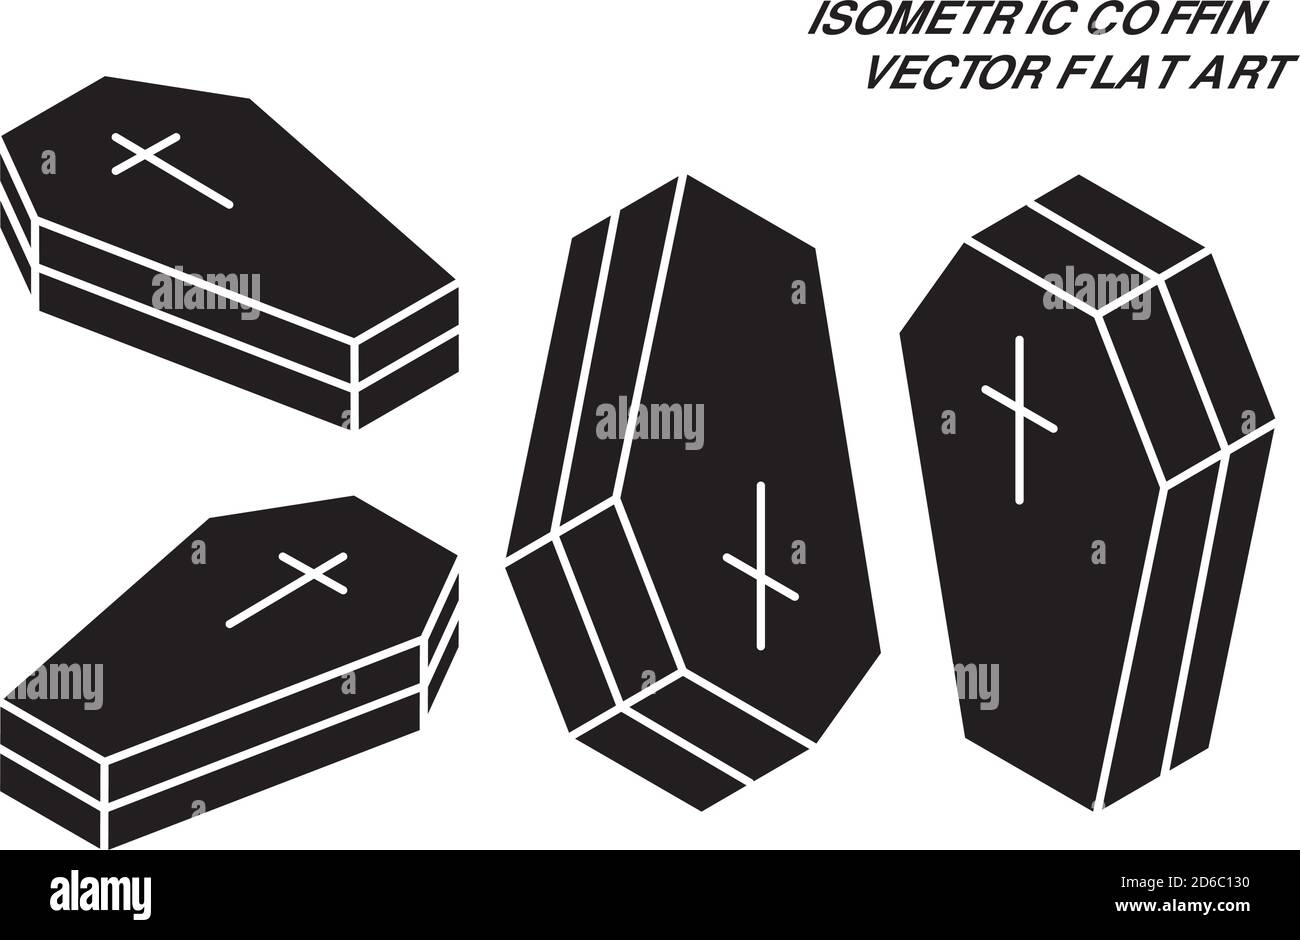 Isometric Coffin Vector Flat Art Set Stock Vector